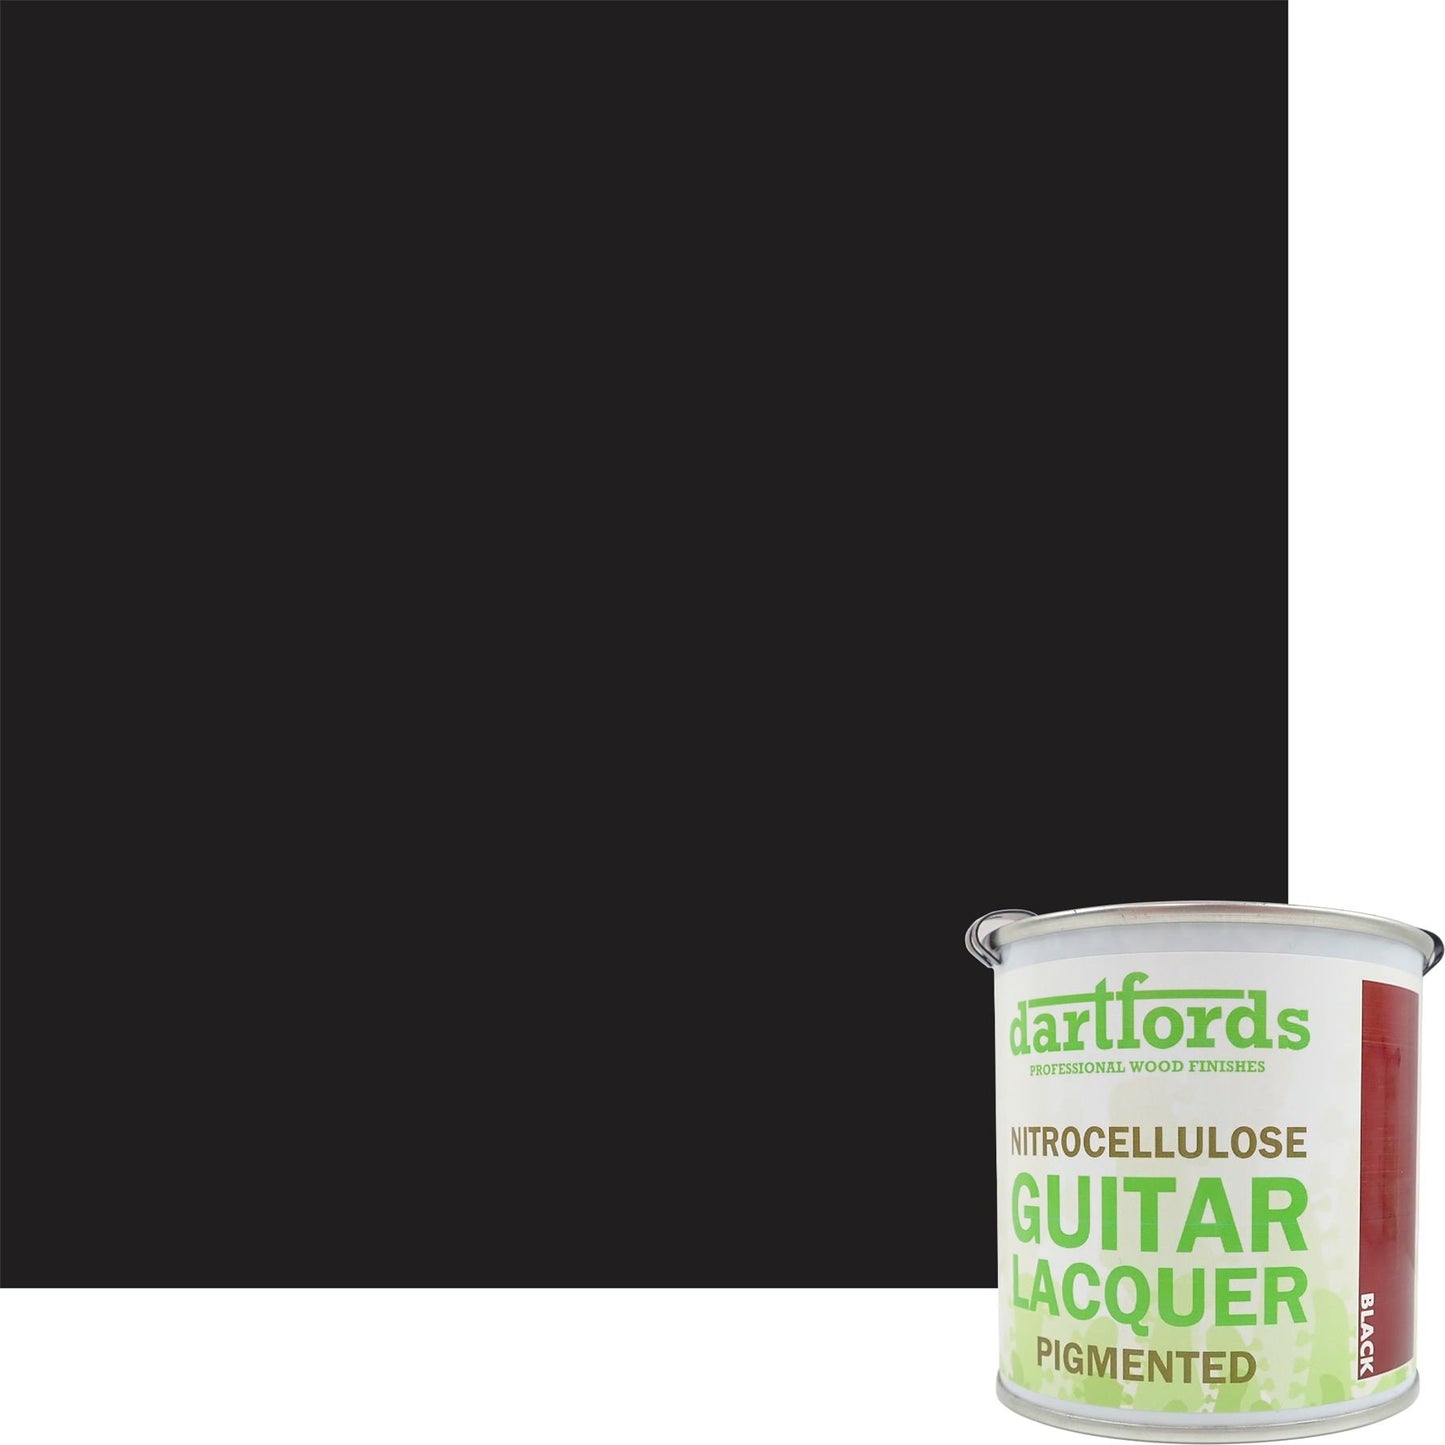 dartfords Strong Black Pigmented Nitrocellulose Guitar Lacquer - 230ml Tin